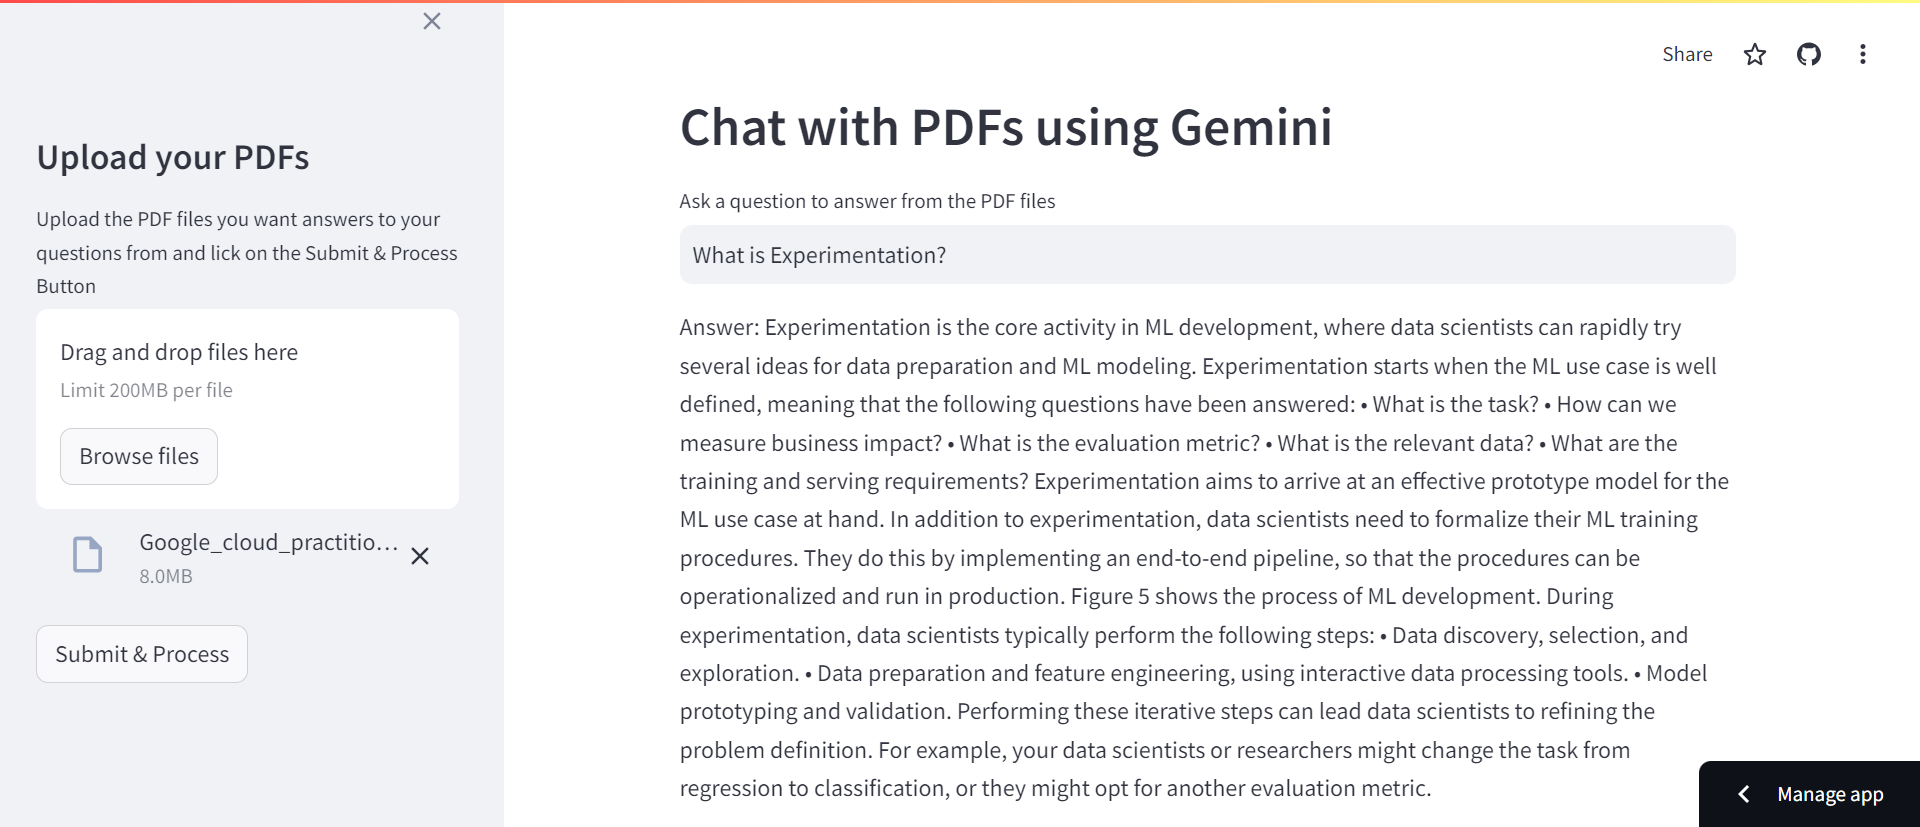 chat_with_pdf_gemini_streamlitapp1